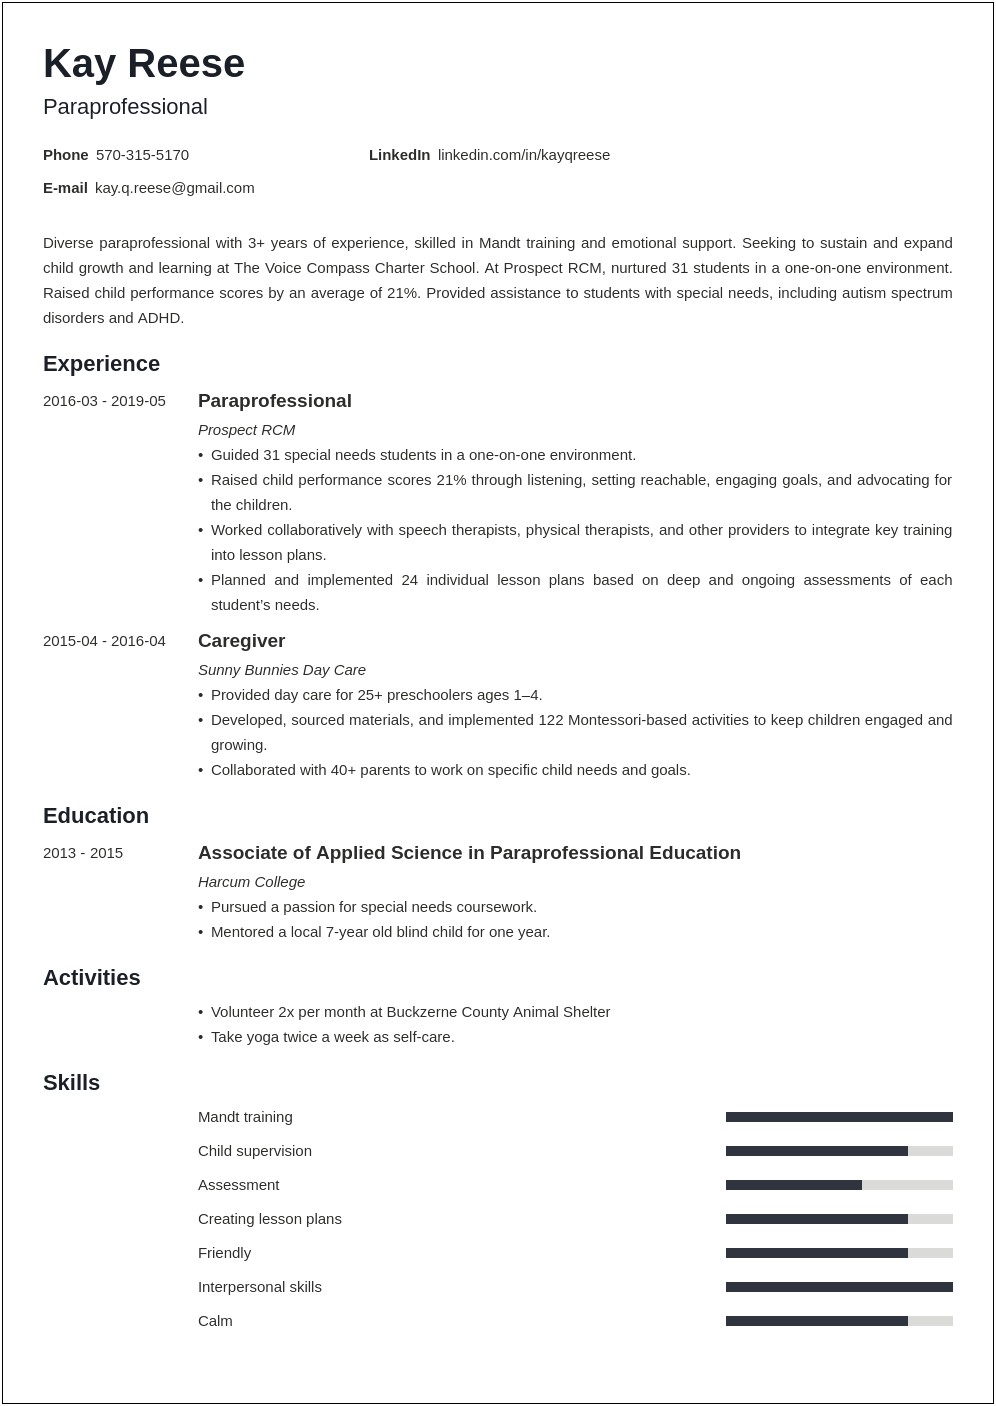 Paraprofessional Job Description For Resume